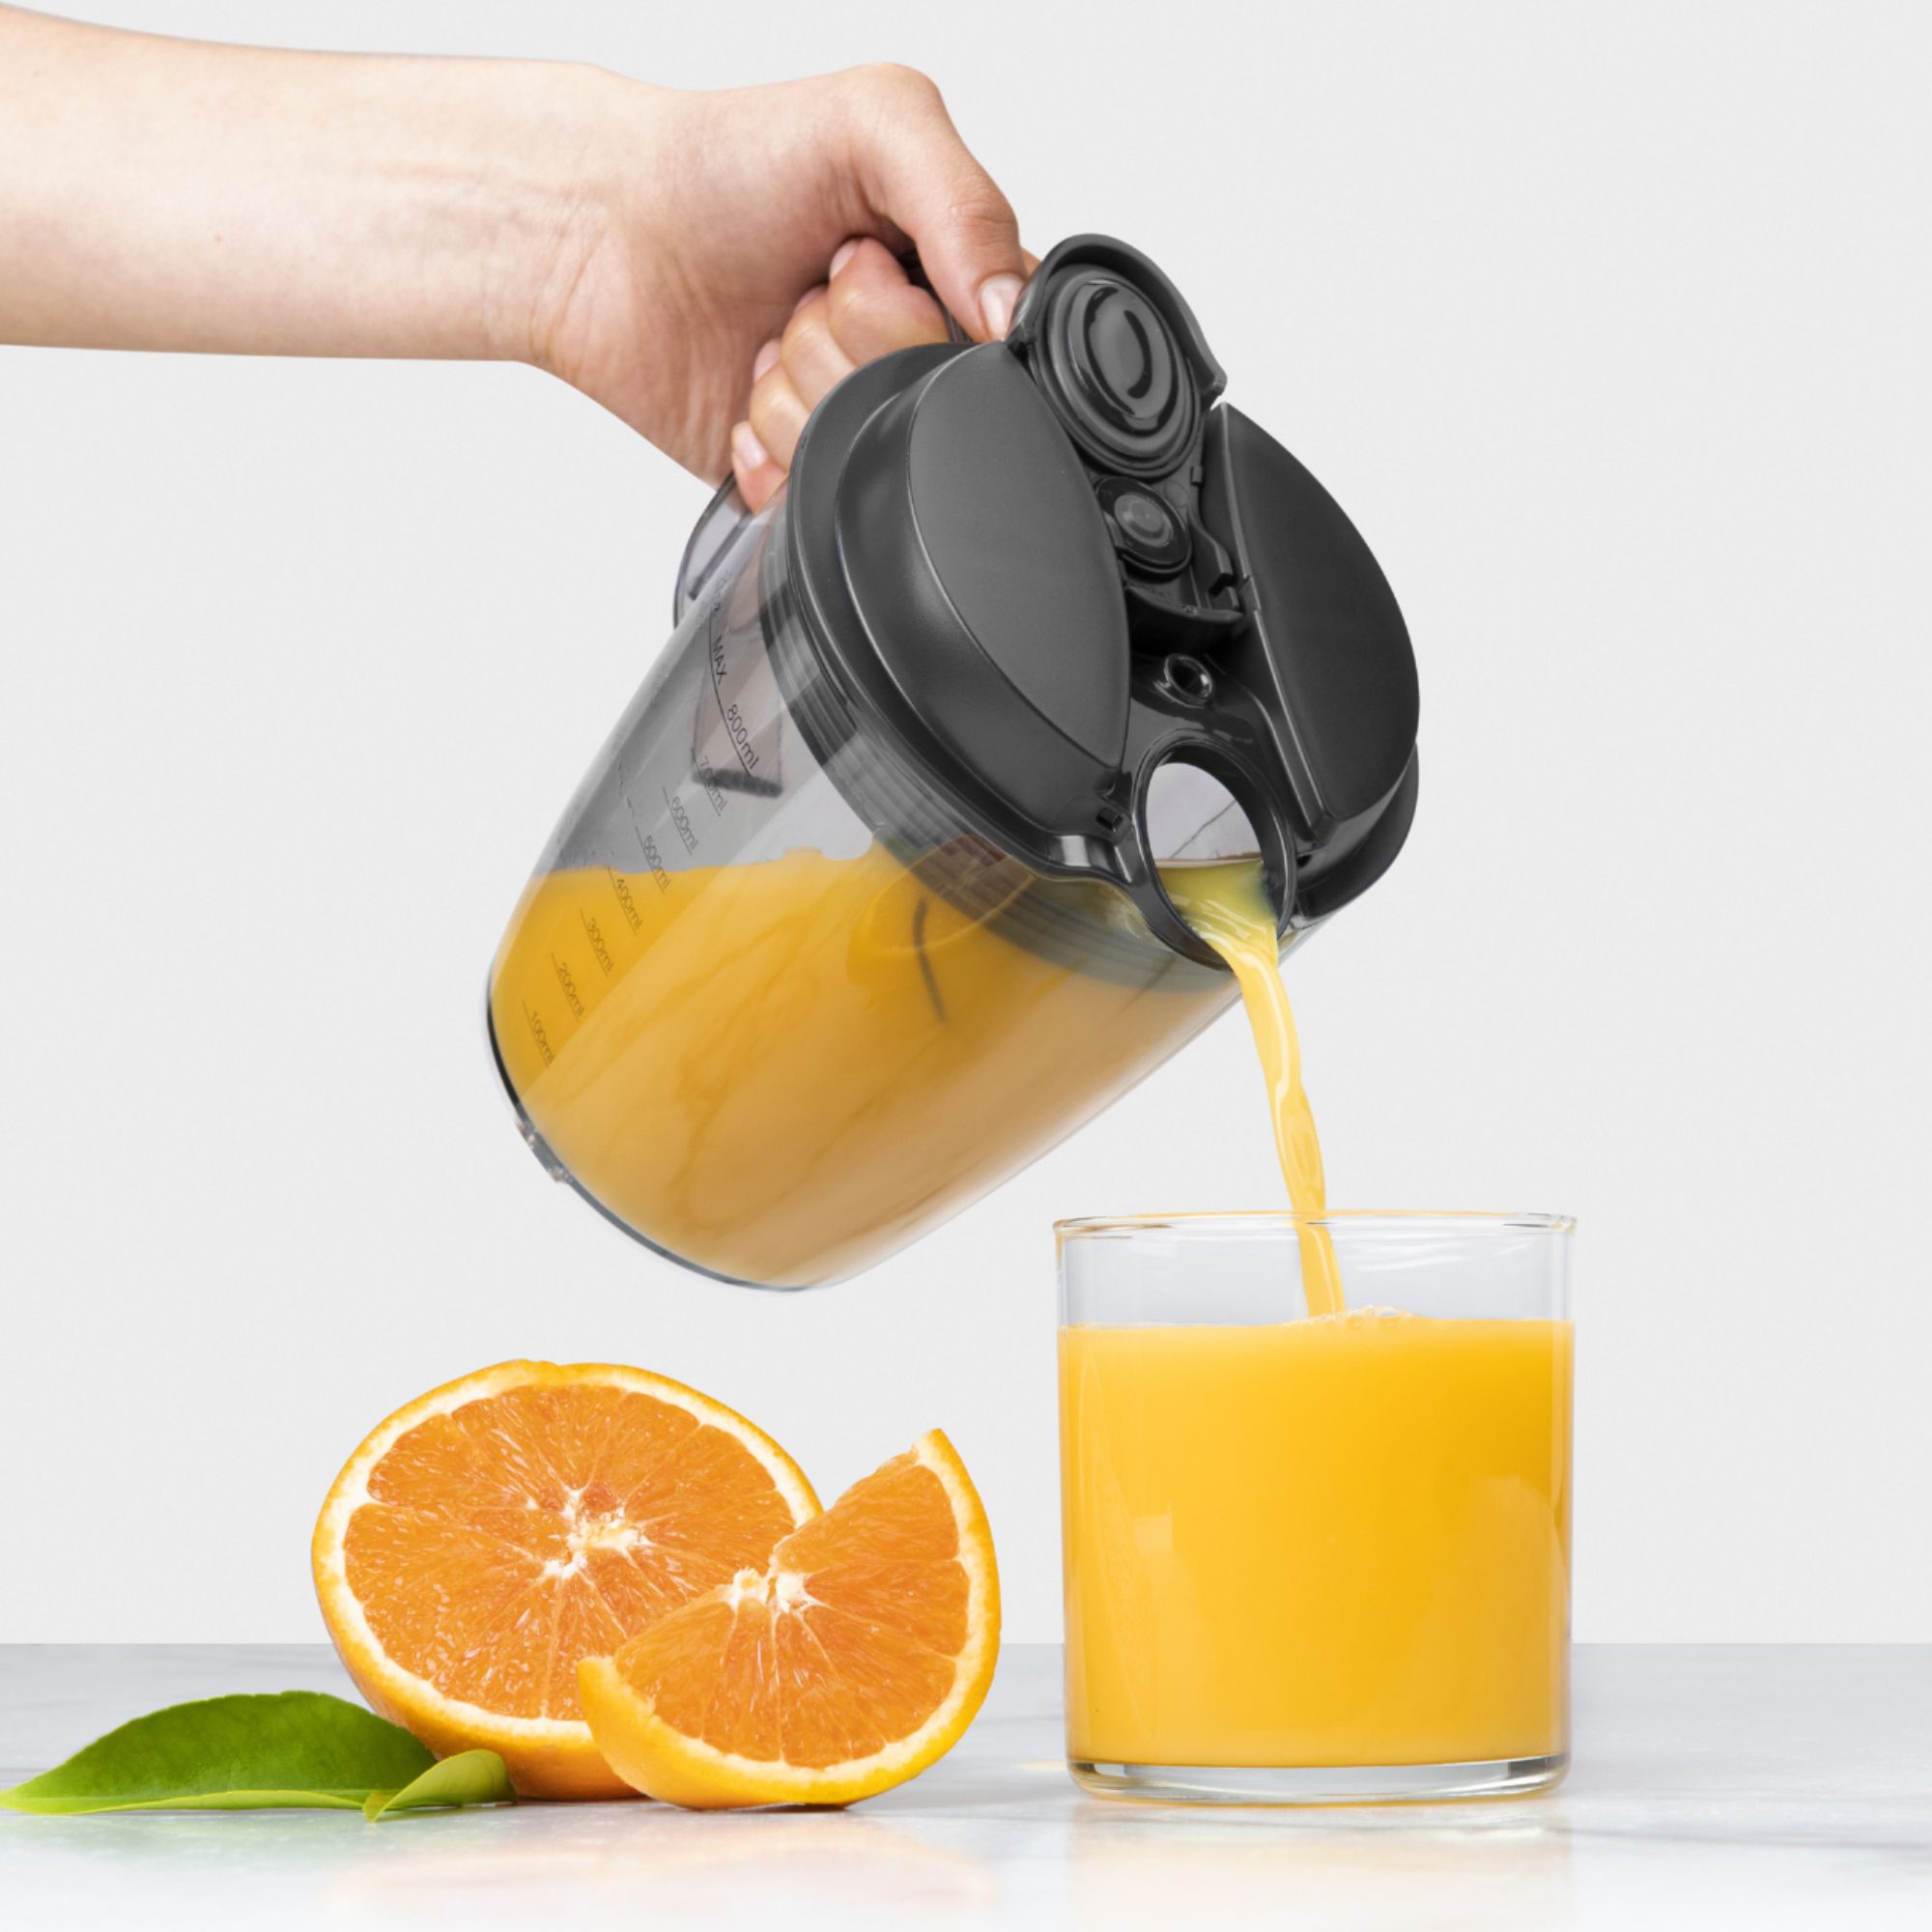  NutriBullet Juicer Pro Centrifugal Juicer Machine for Fruit,  Vegetables, and Food Prep, 27 Ounces/1.5 Liters, 1000 Watts, Silver,  NBJ50200 & ZNBF30500Z Blender Combo 1200 Watt, 1200W, Dark Gray: Home &  Kitchen